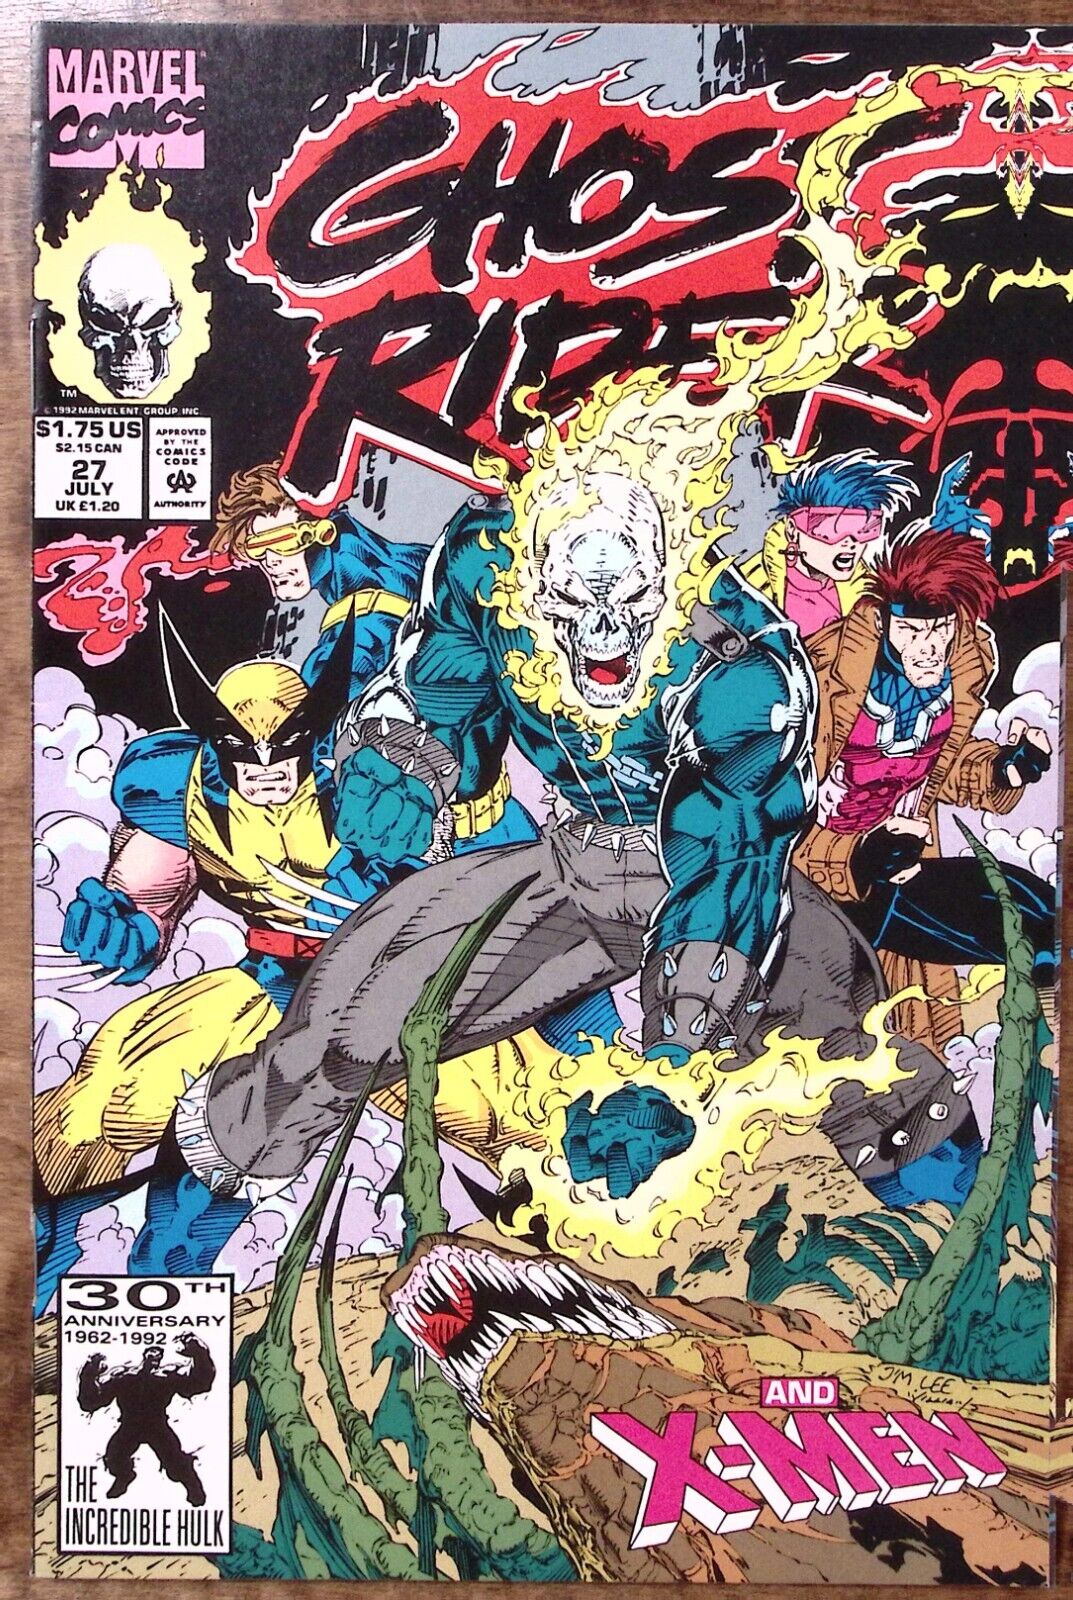 1992 GHOST RIDER AND X-MEN JULY #27 MARVEL COMICS 30th ANNIVERSARY HULK EX Z3577